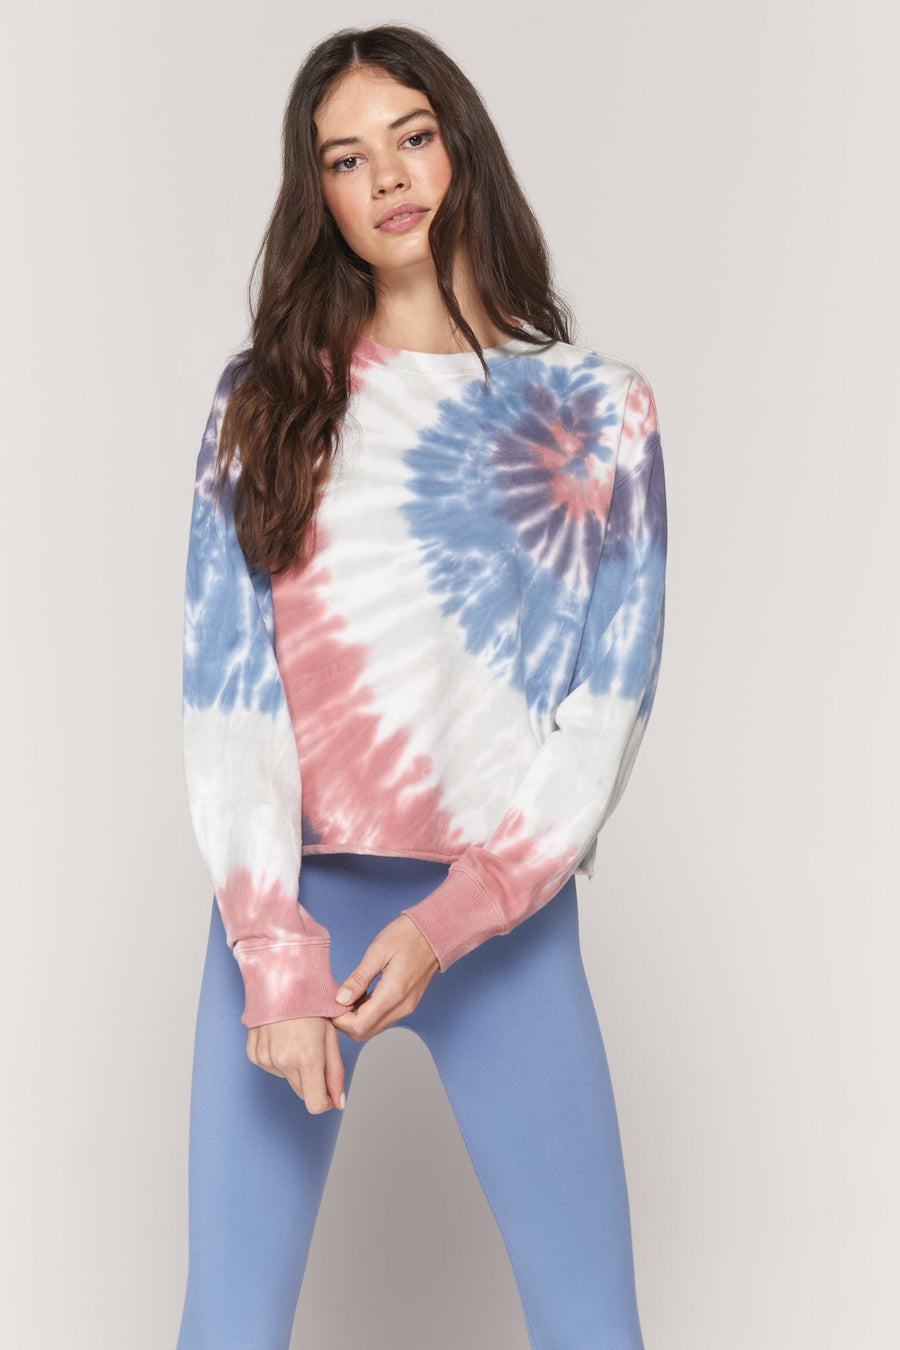 Mazzy Pullover Sweatshirt Seascape Spiral Tie Dye